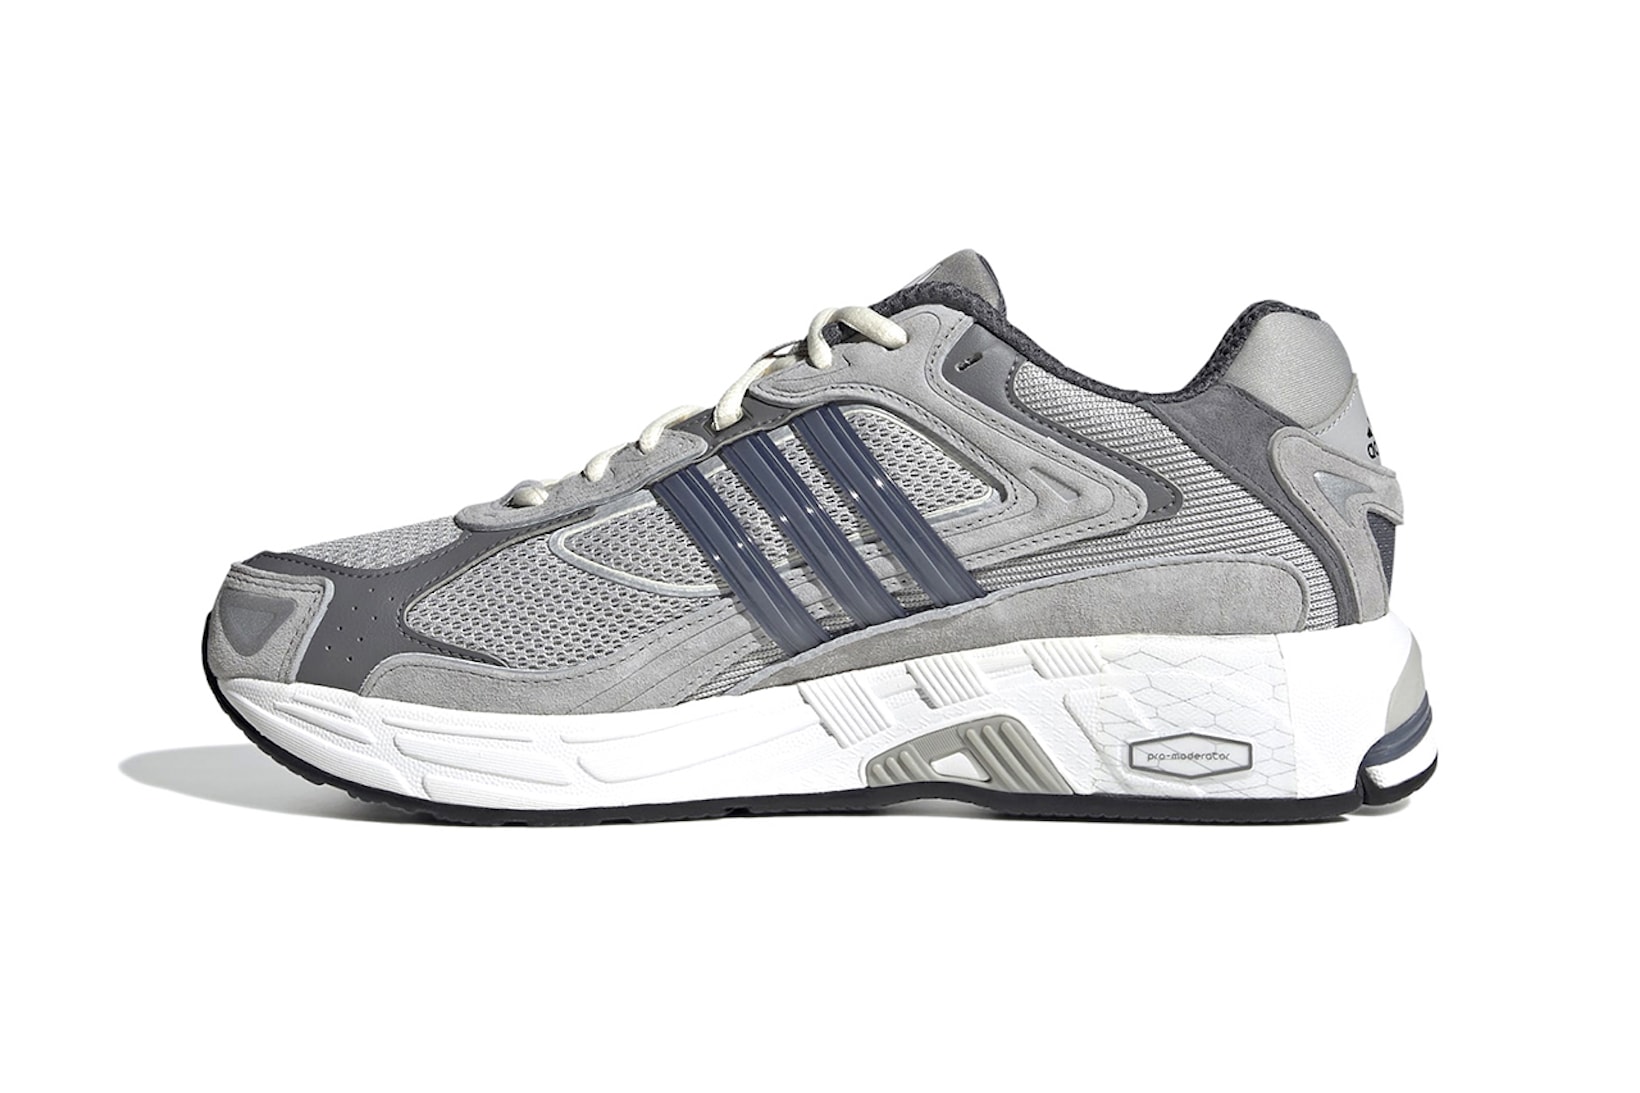 Adidas Originals Response CL Metal Grey White Footwear Sneakers Shoes Kicks Lateral